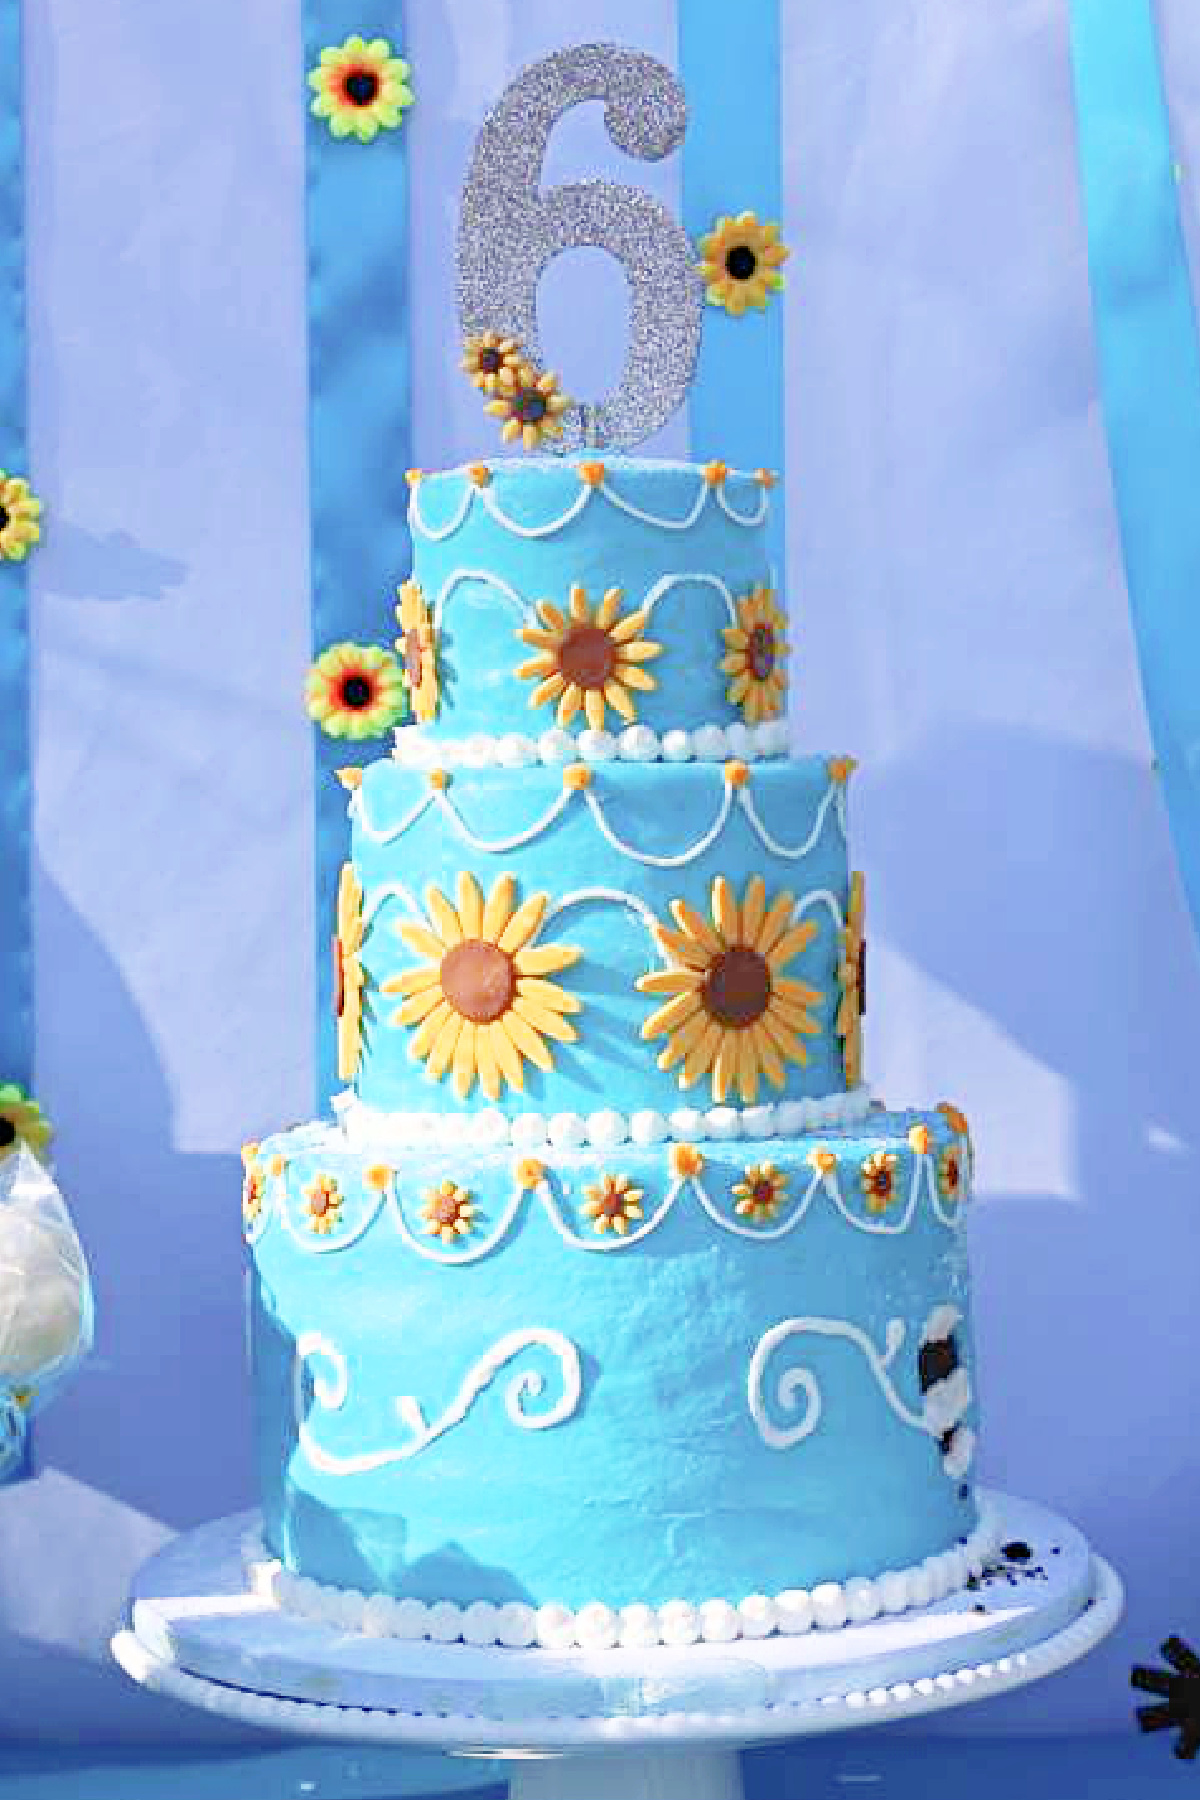 Anna's Frozen Fever Birthday Cake